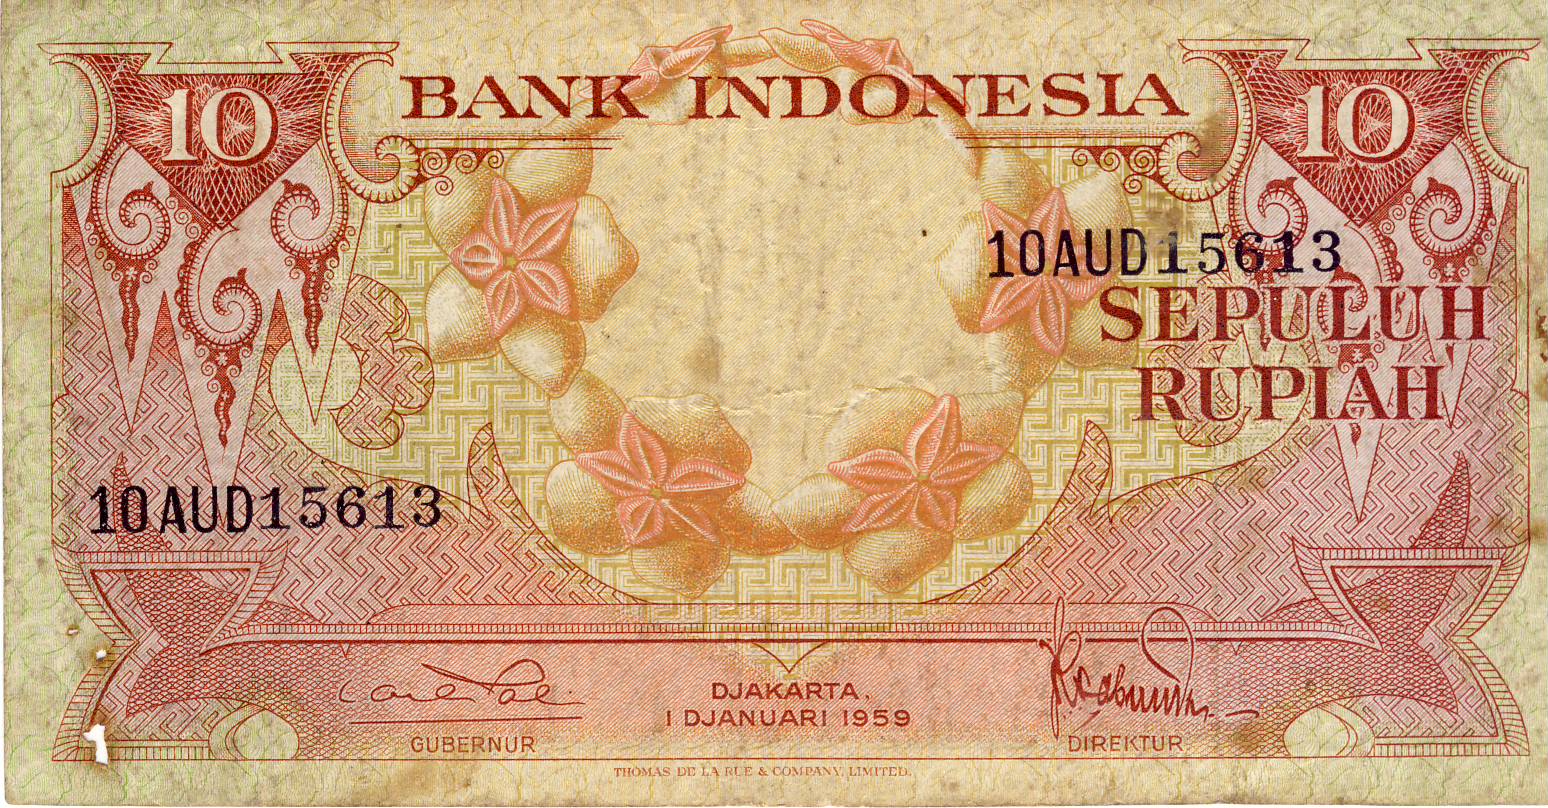  Uang kertas  kuno Indonesia nominal Rp 10 sepuluh 